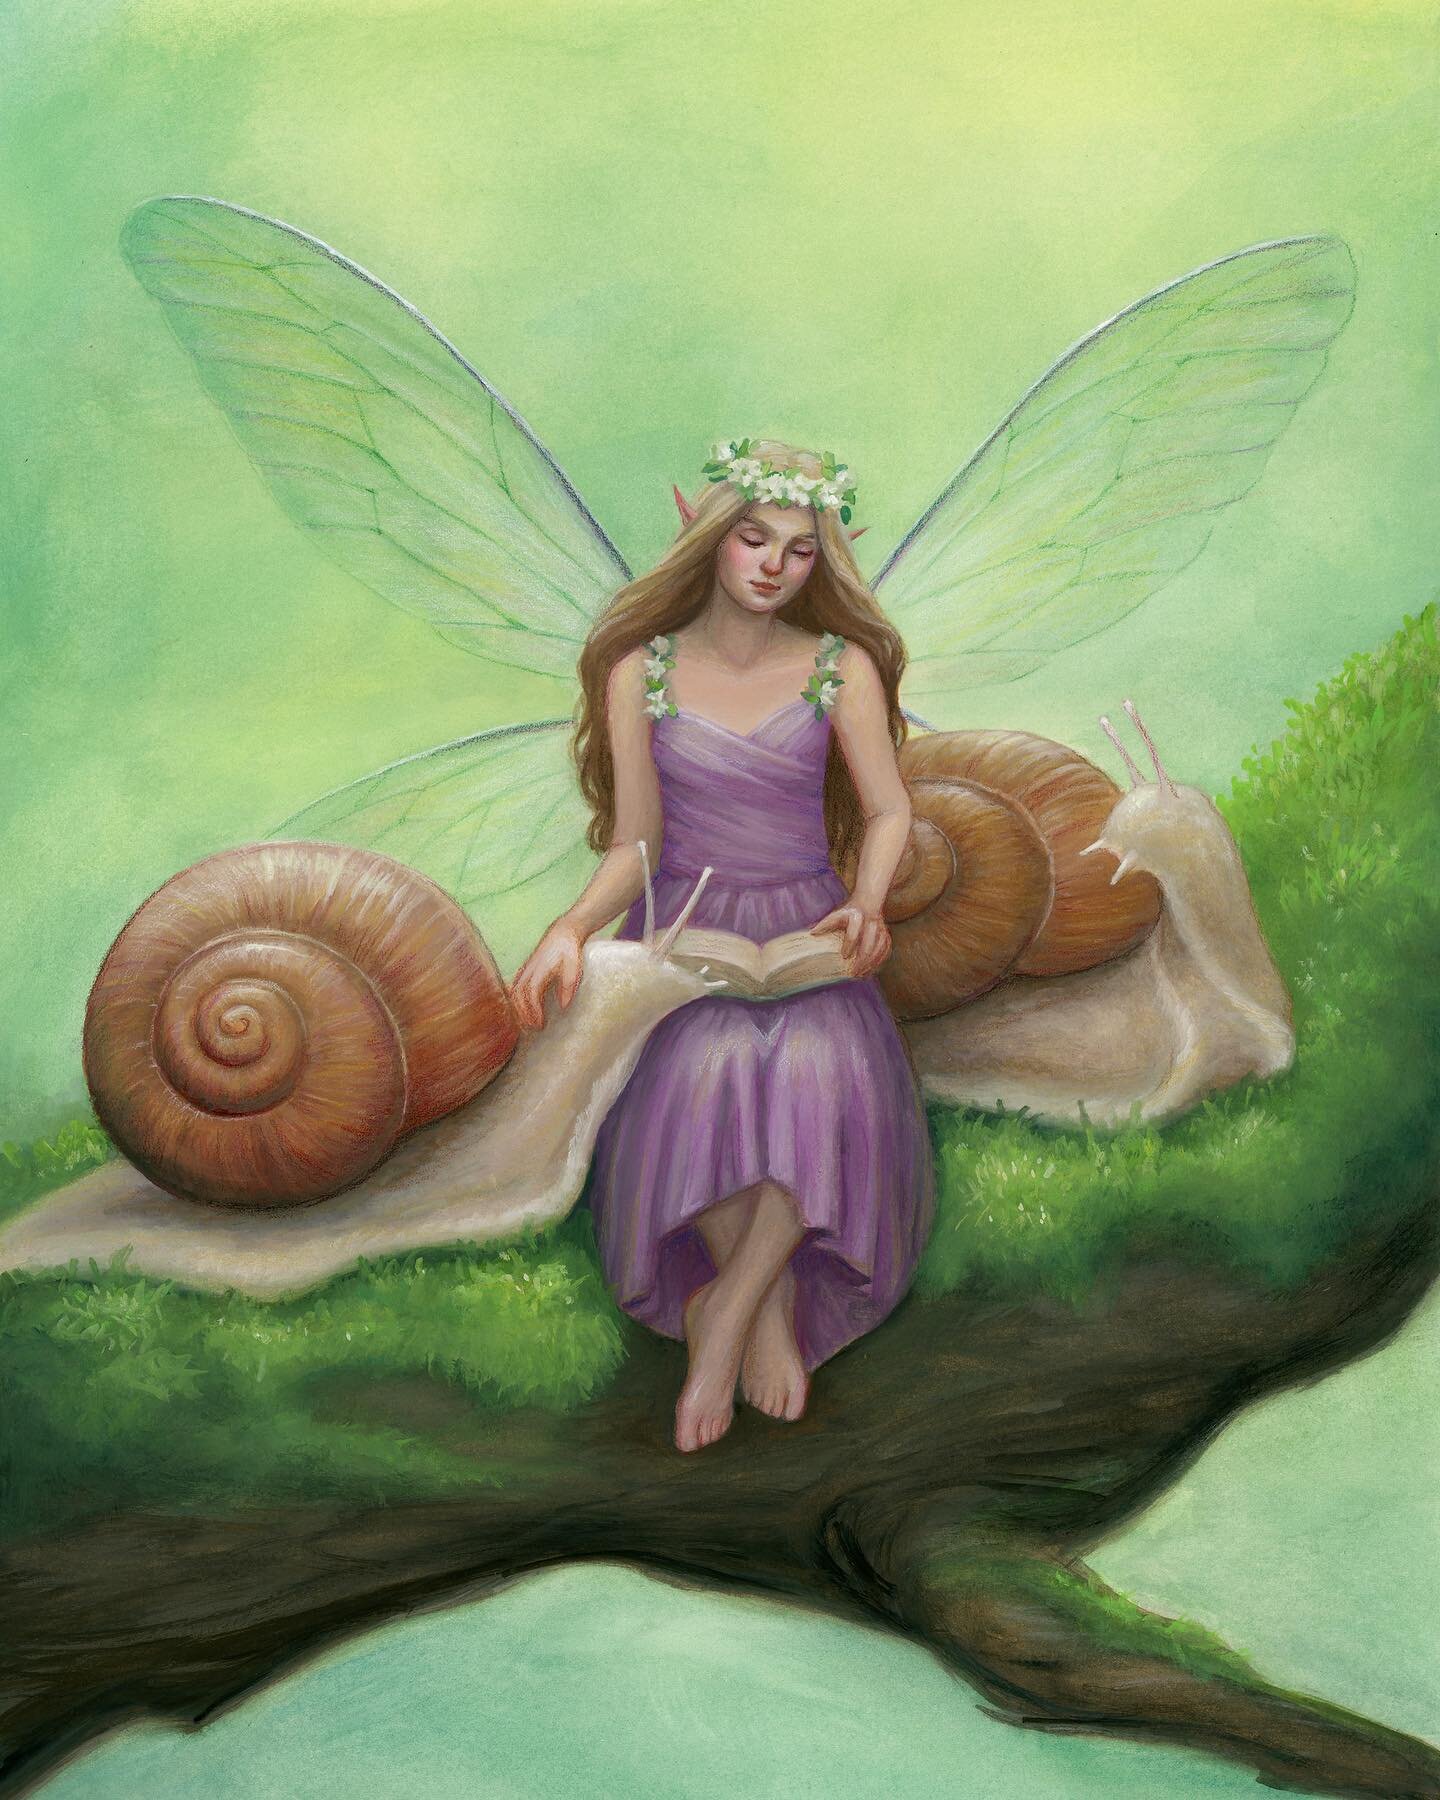 Fairy with snails 11x14&rdquo; gouache and colored pencils on Arches watercolor paper. 💚
.
.
.
#gouachepaint #fairypainting #fantasyart #fairytale #fairyart